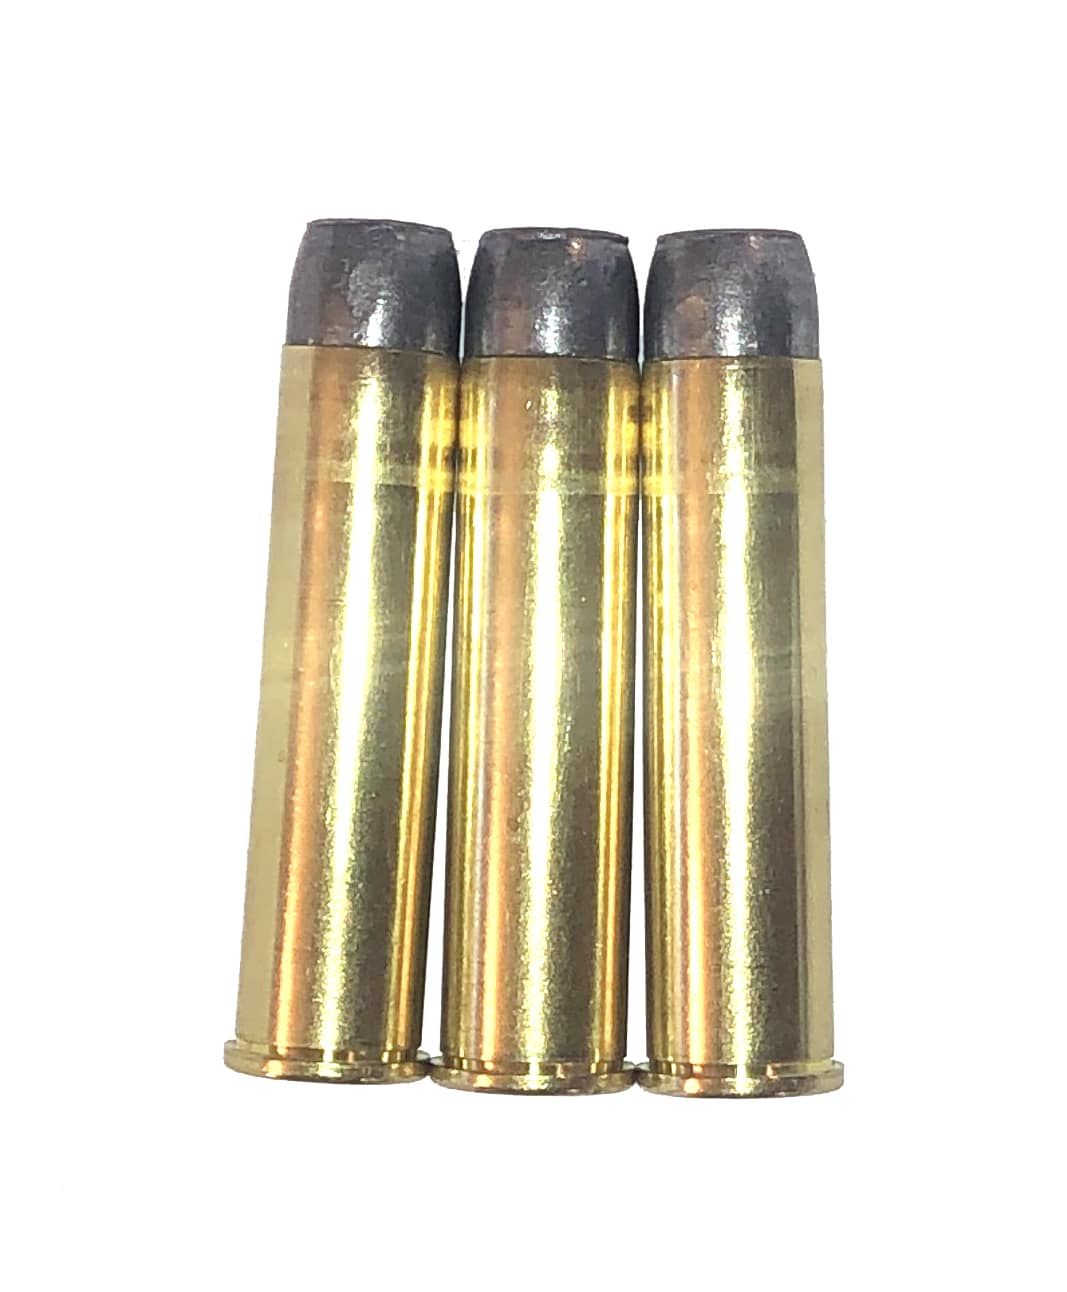 50 Alaskan Dummy Rounds Snap Caps Fake Bullets Ammo J&M Spec INERT